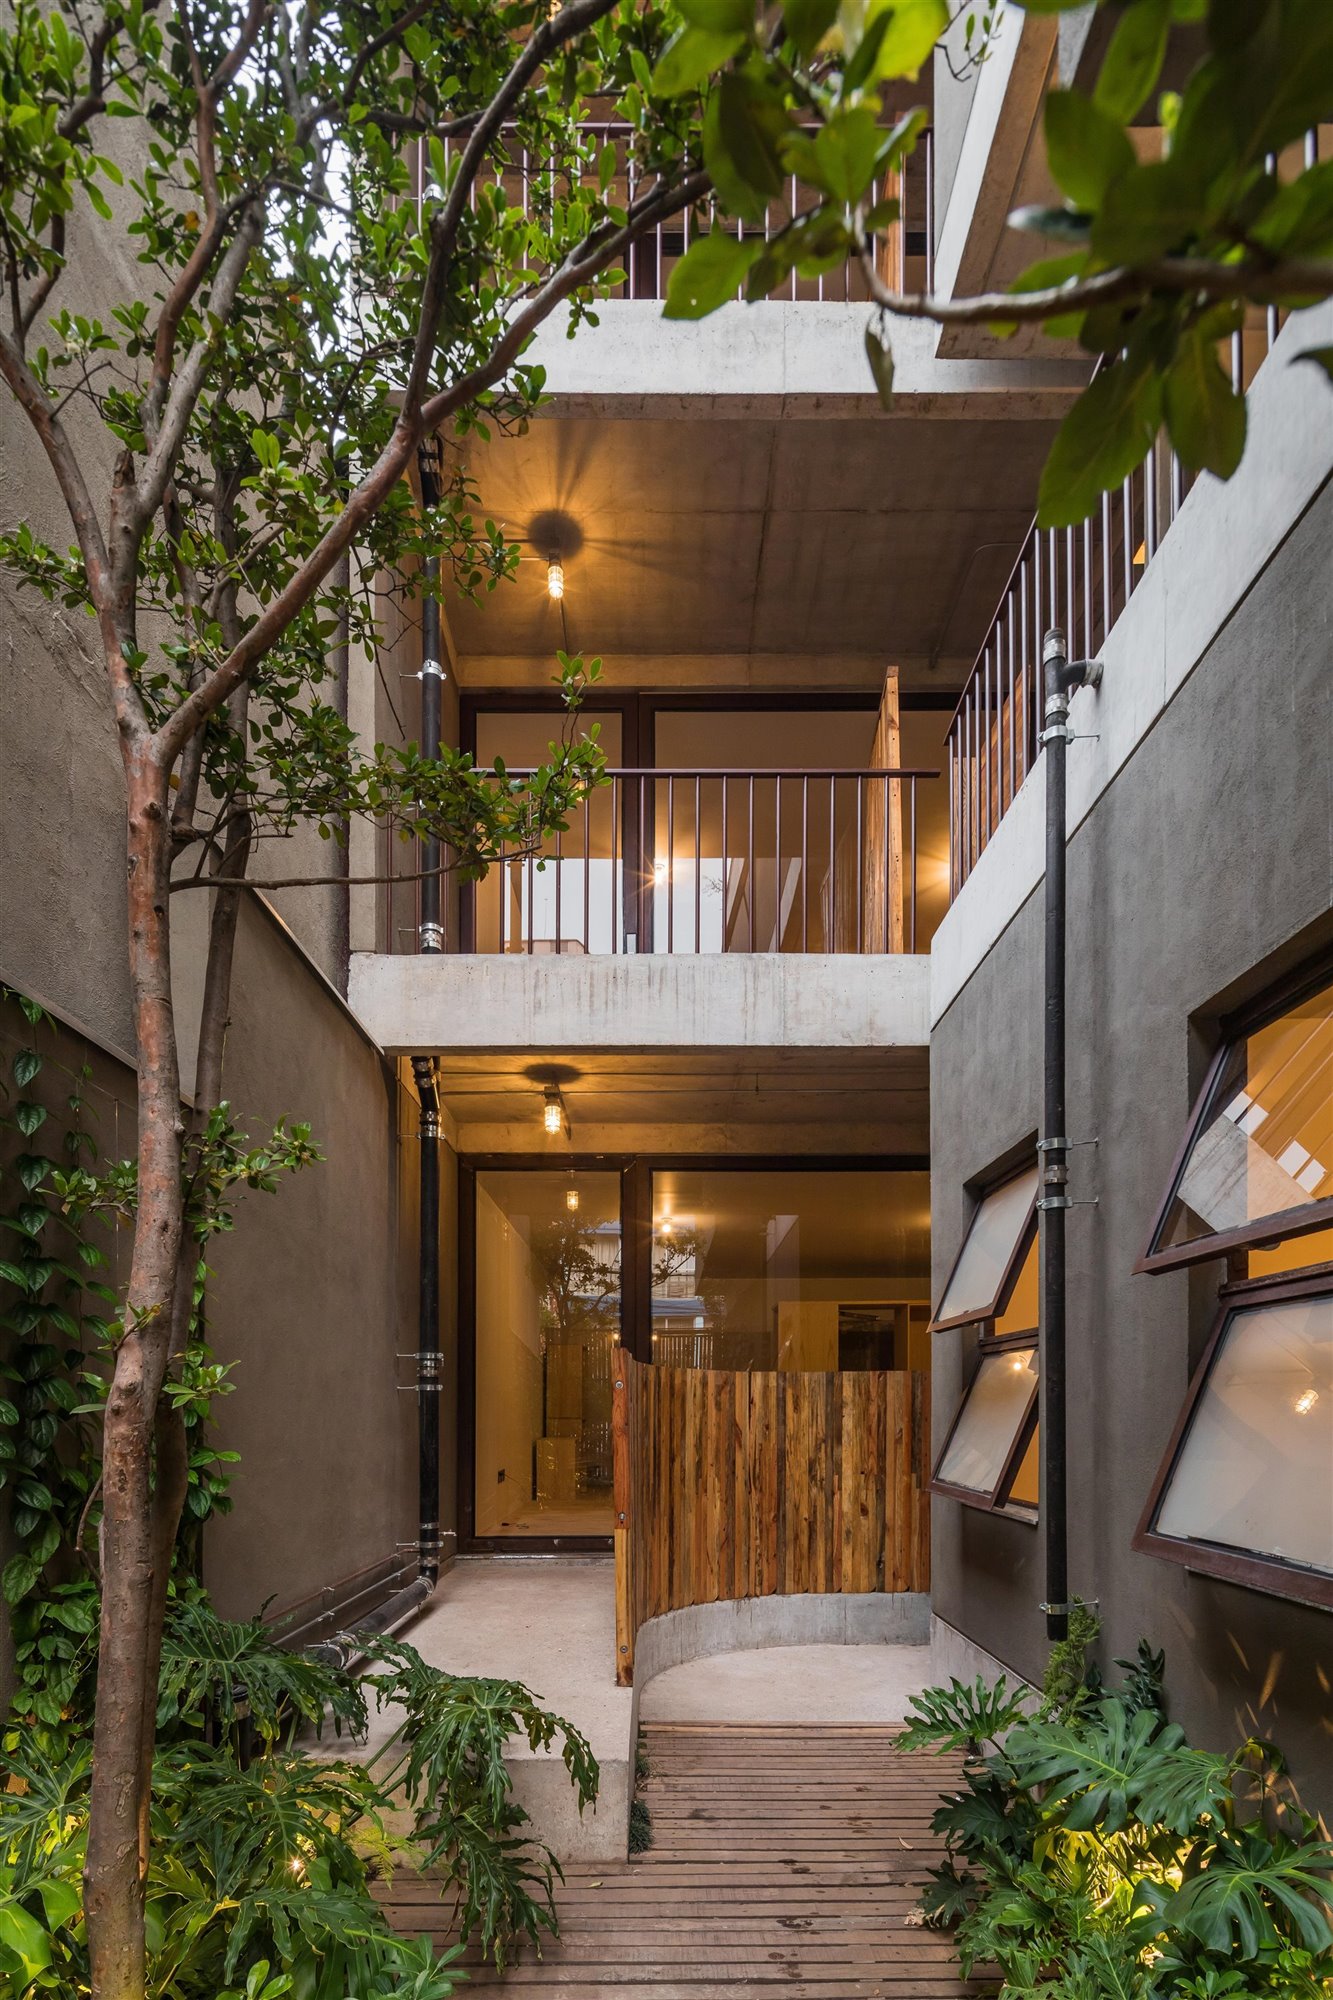 Apartamentos moderns en Mexico de lujo con interiores de madera entrada con parking de bicis